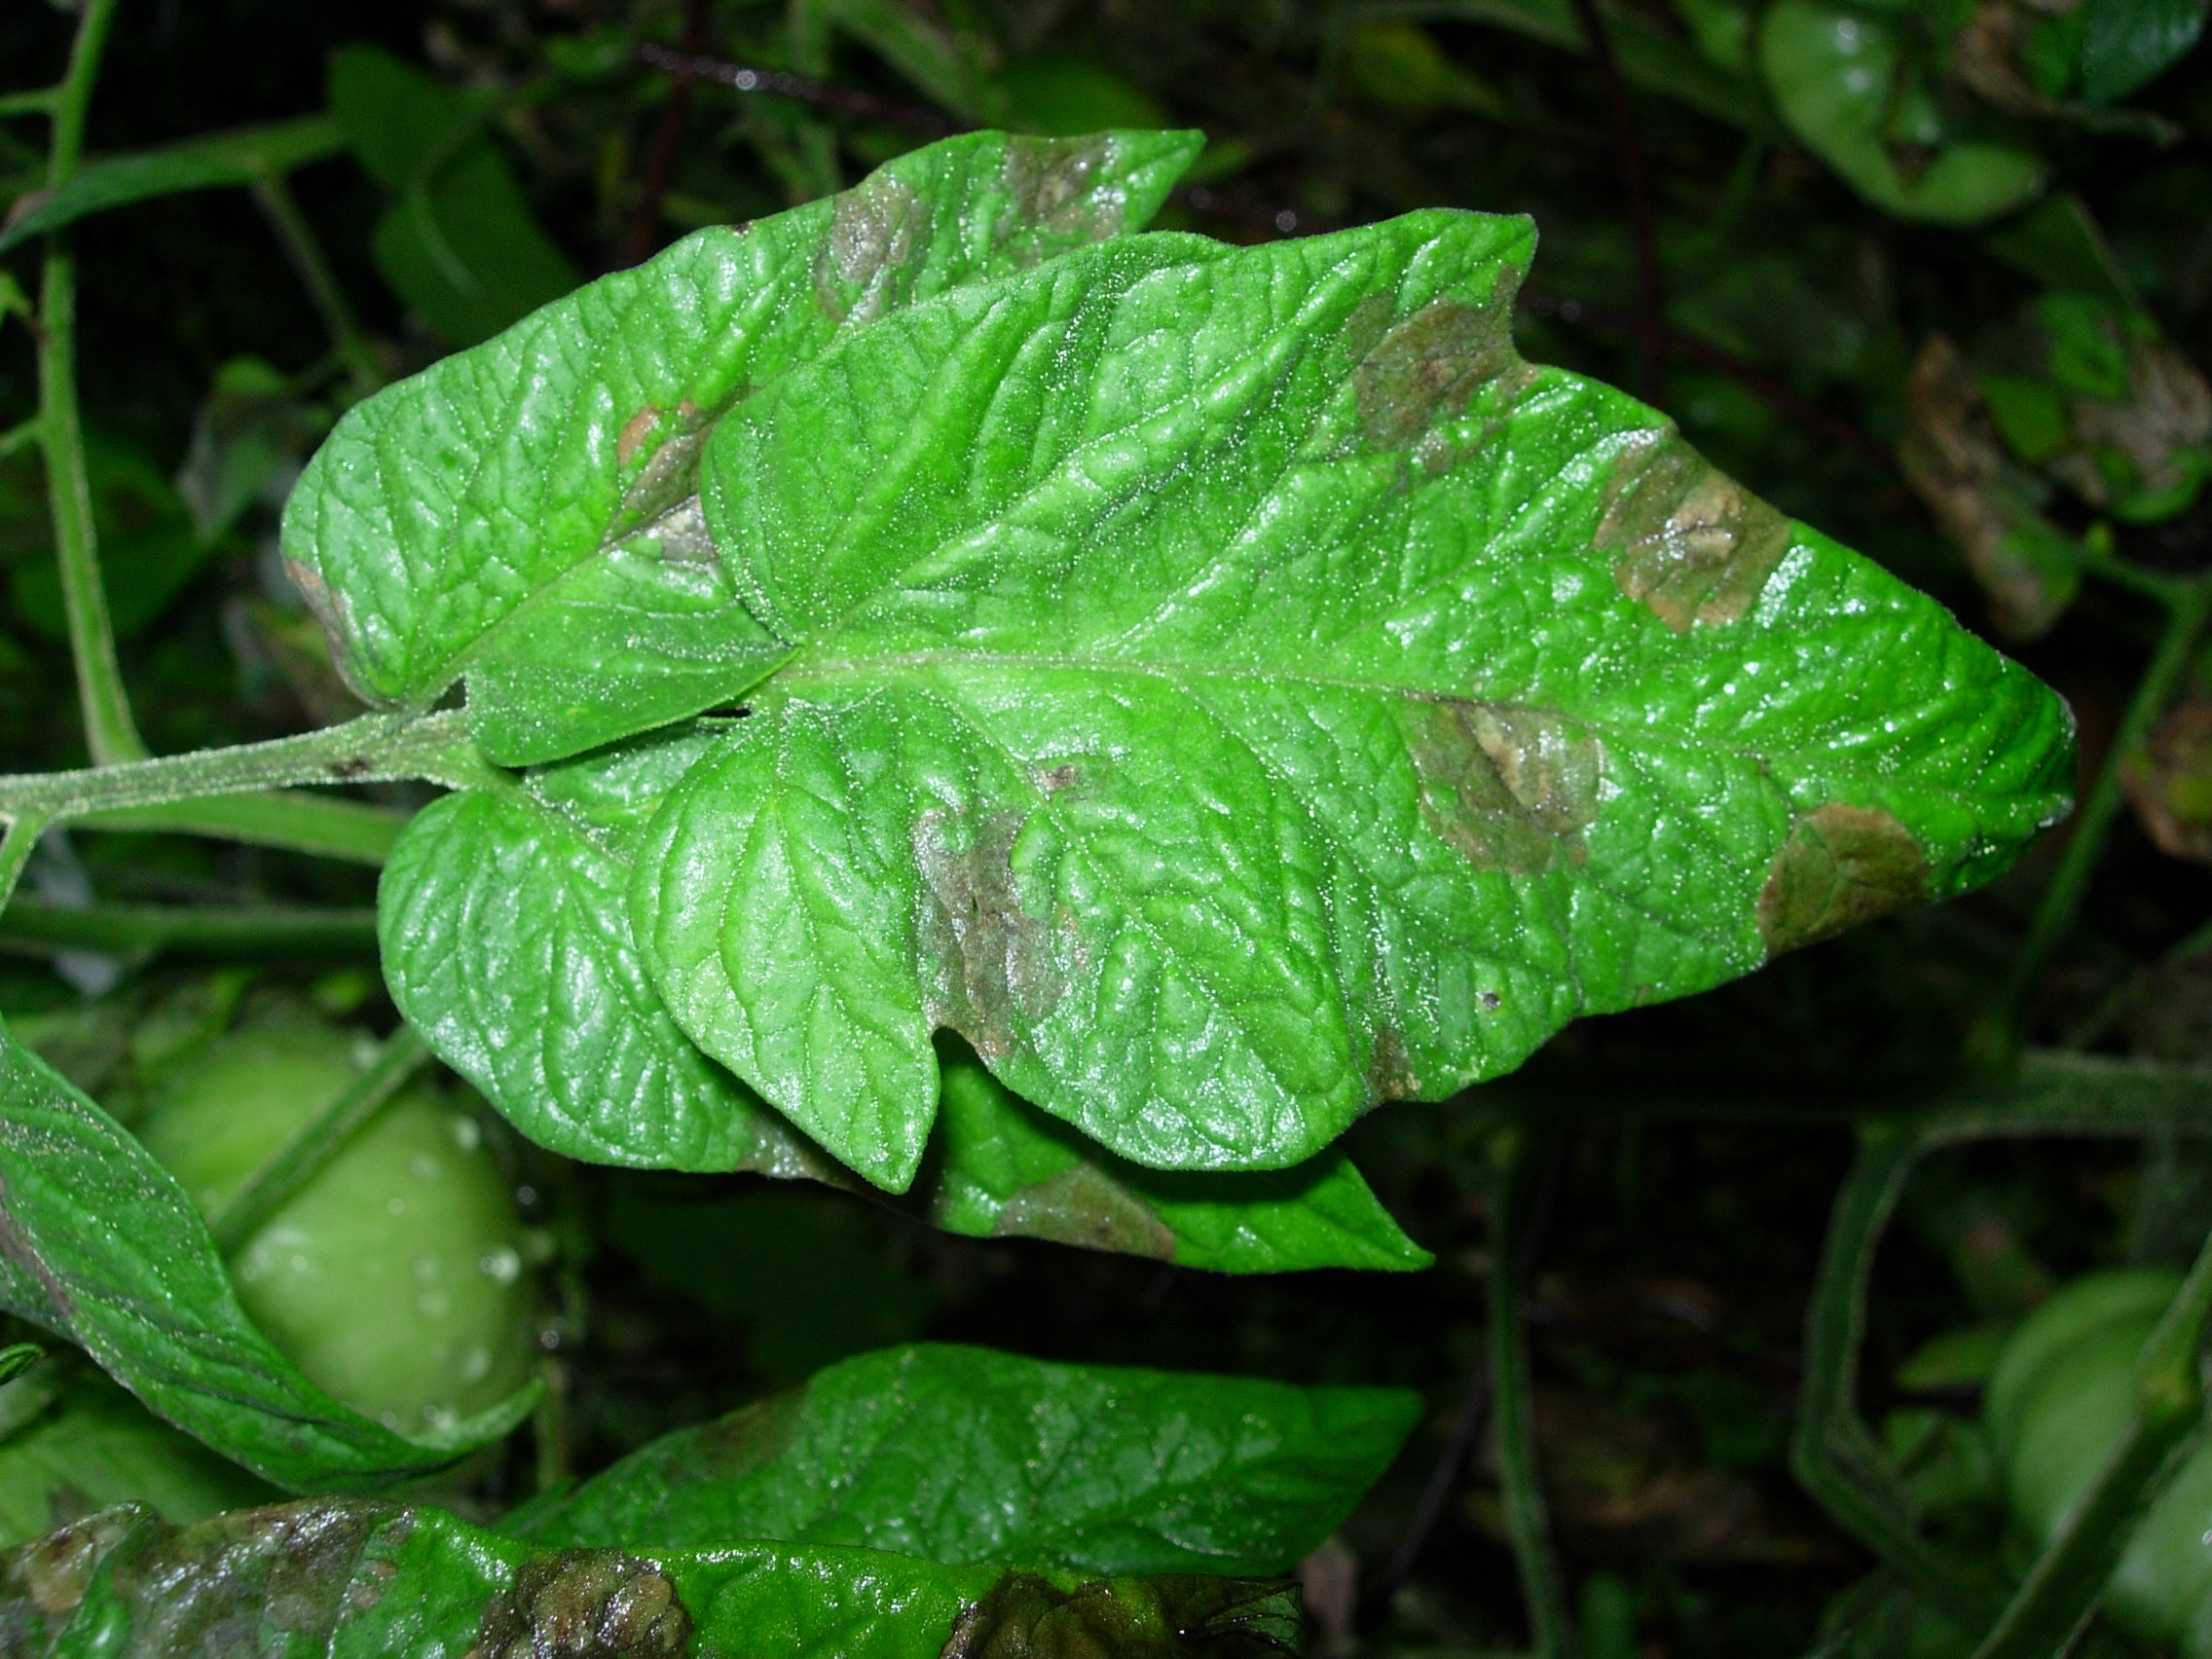 Late blight on leaf